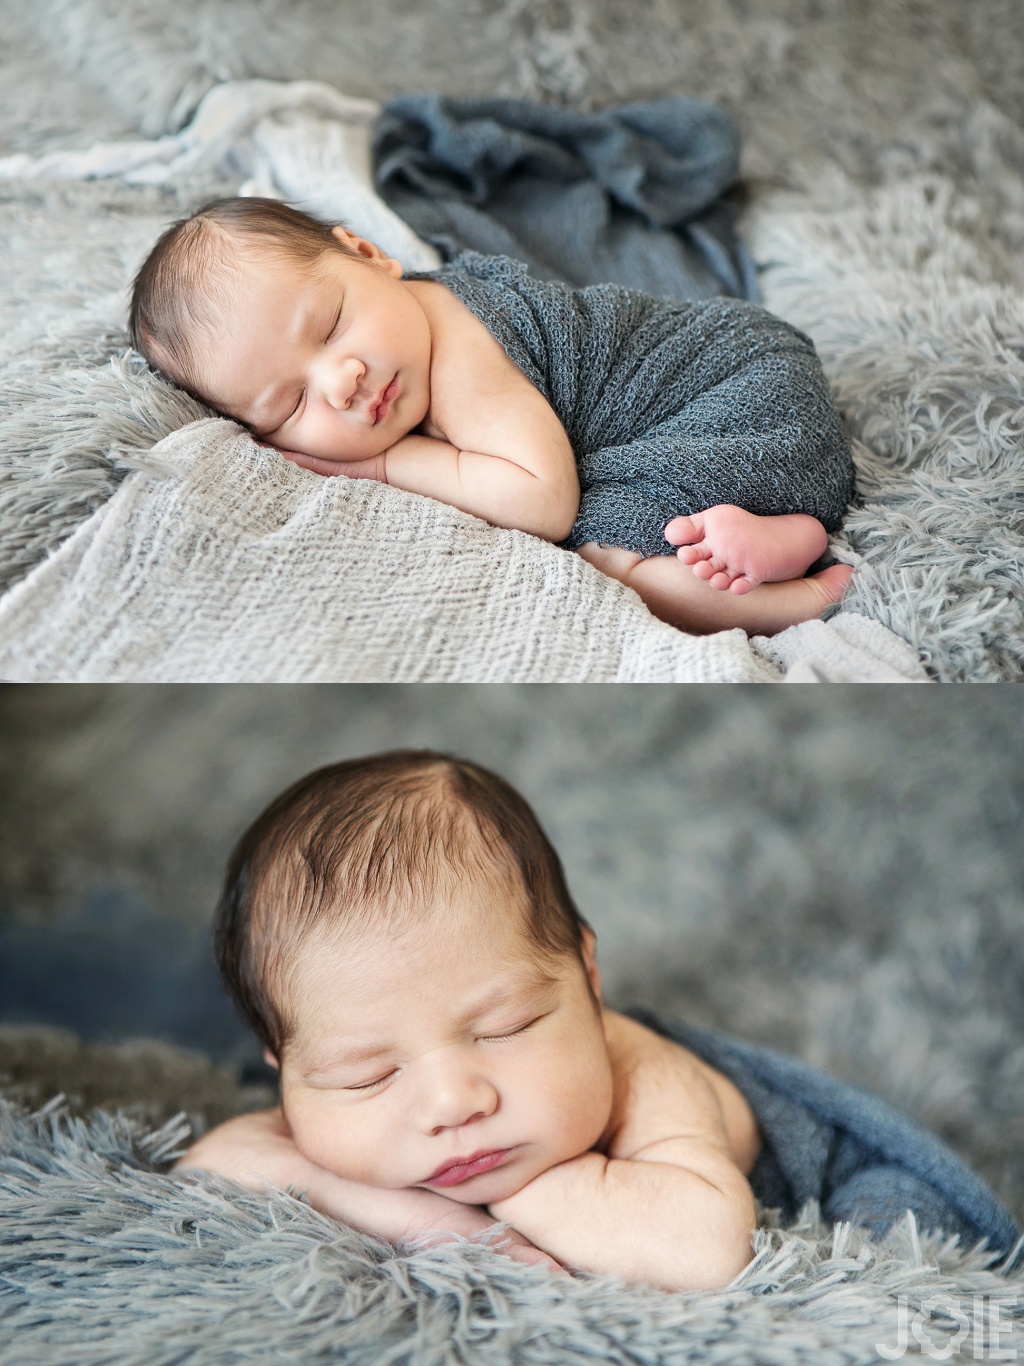 Baby Rayos Houston newborn photography session